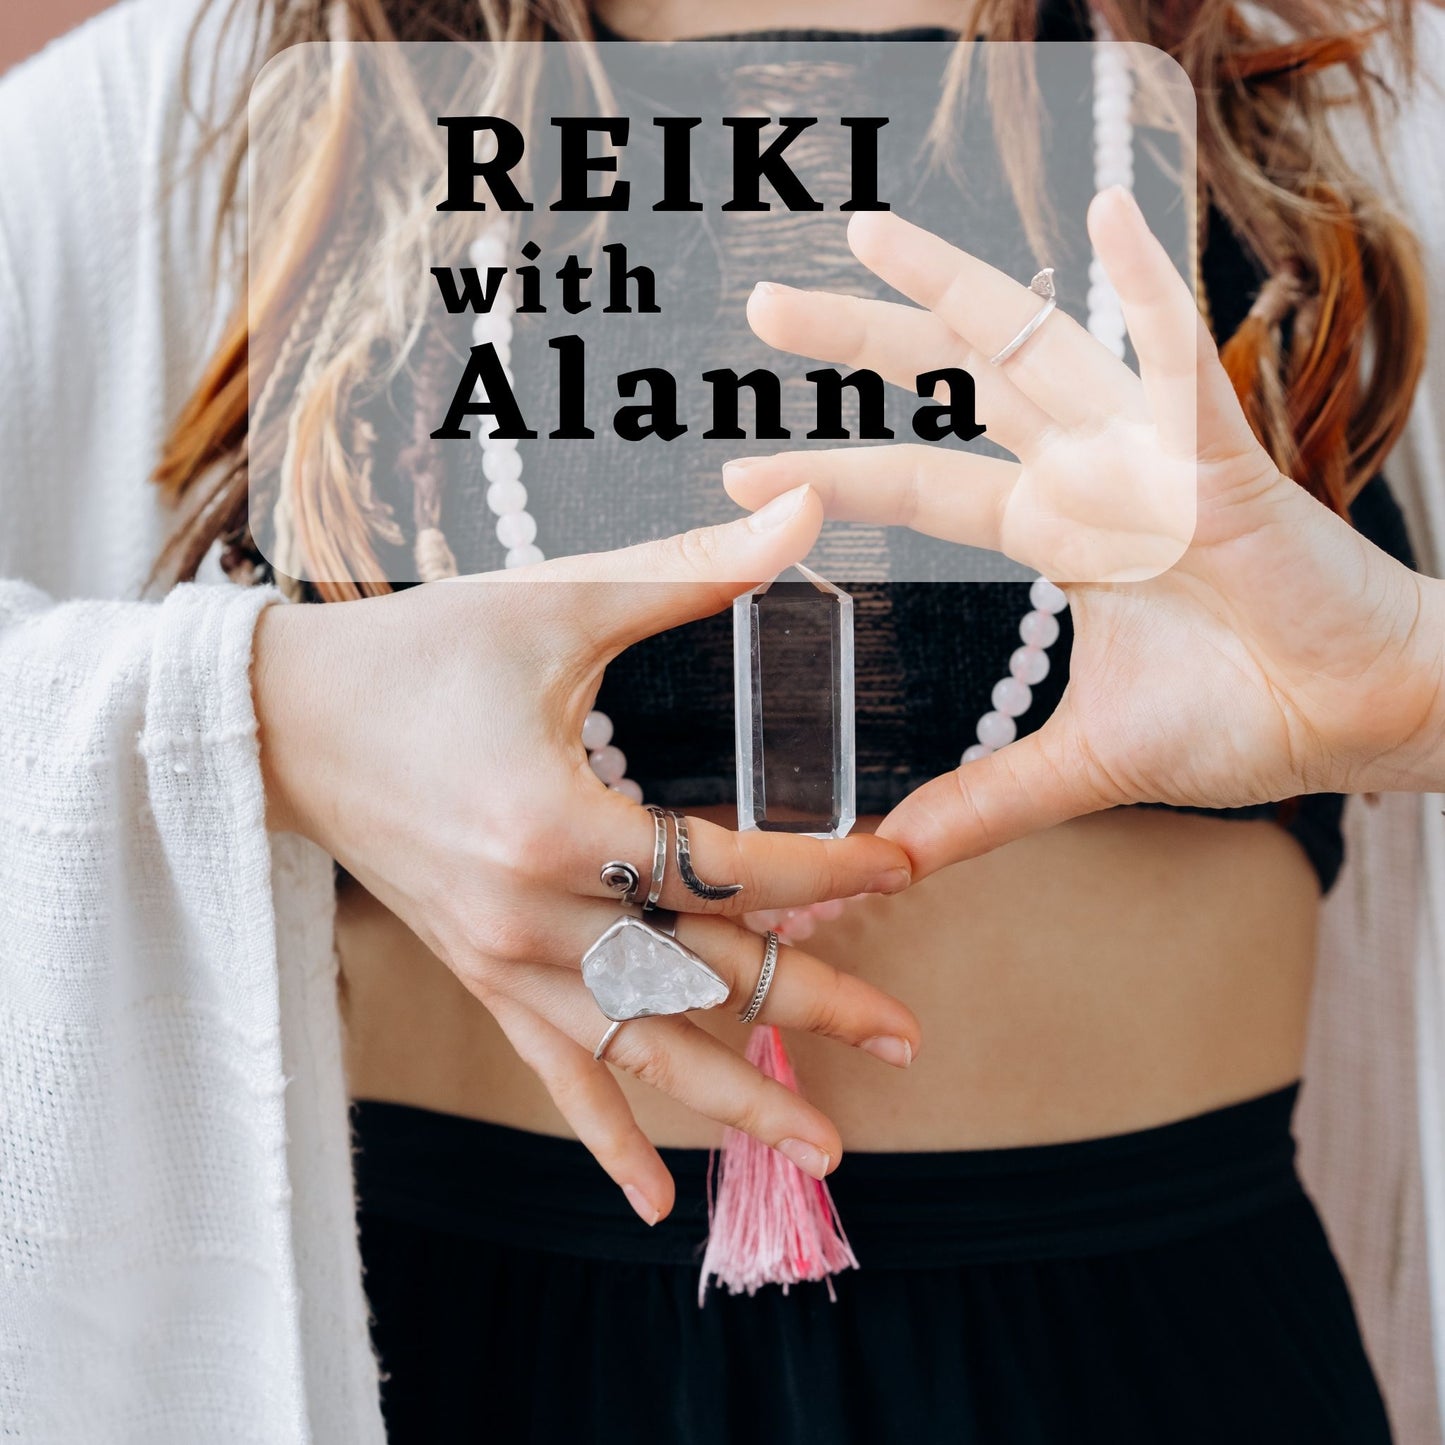 Reiki with Alanna